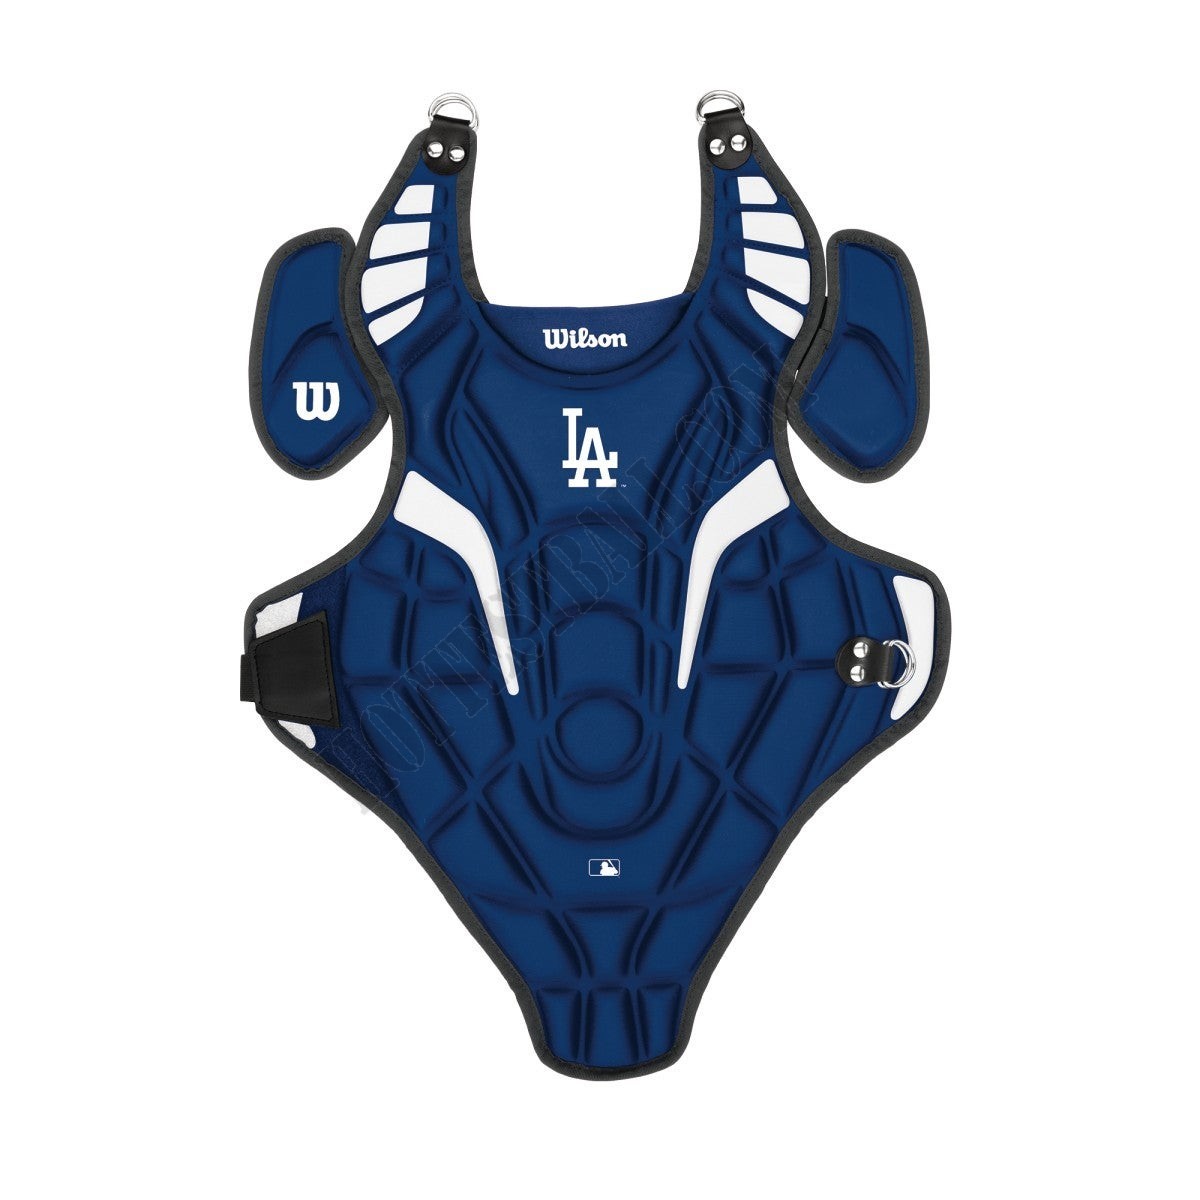 EZ Gear Catcher's Kit - Los Angeles Dodgers - Wilson Discount Store - -0